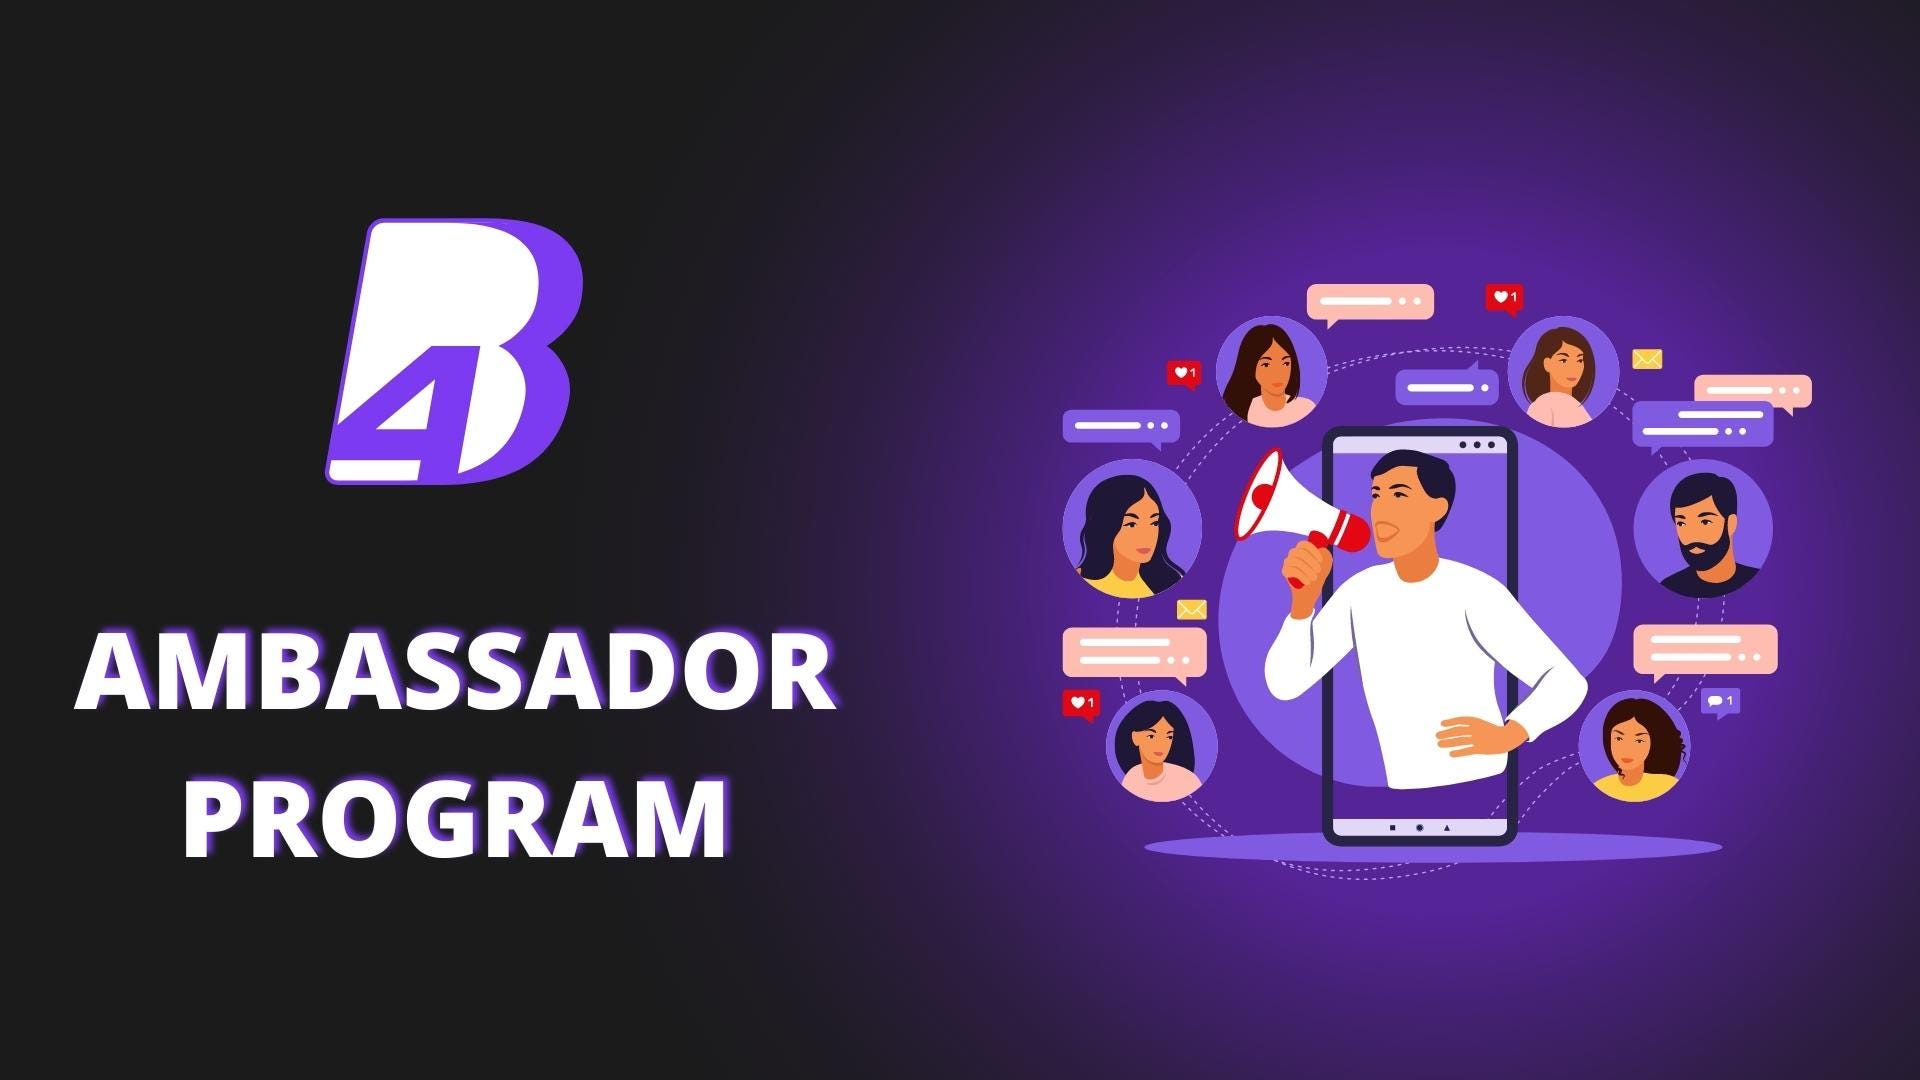 B4B Ambassador Program